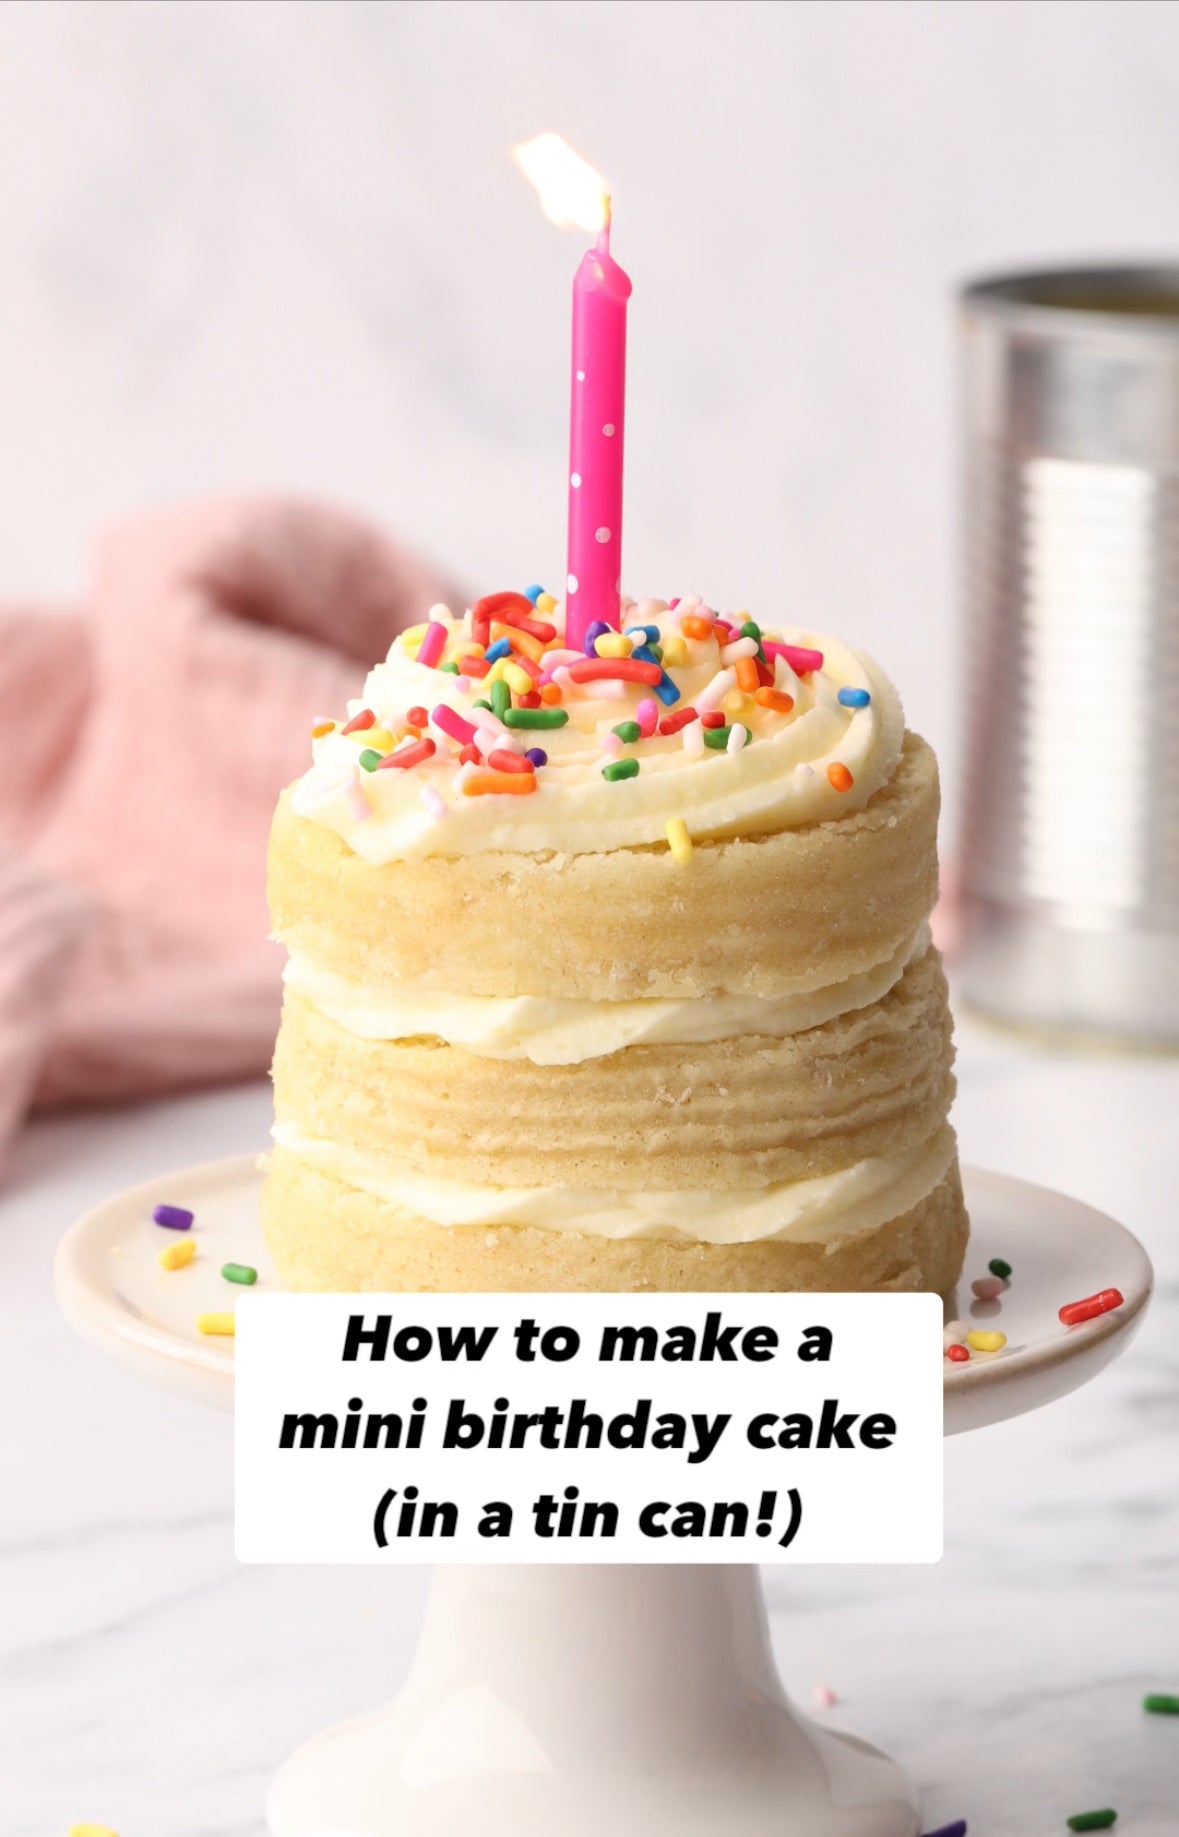 Make a tin can birthday cake